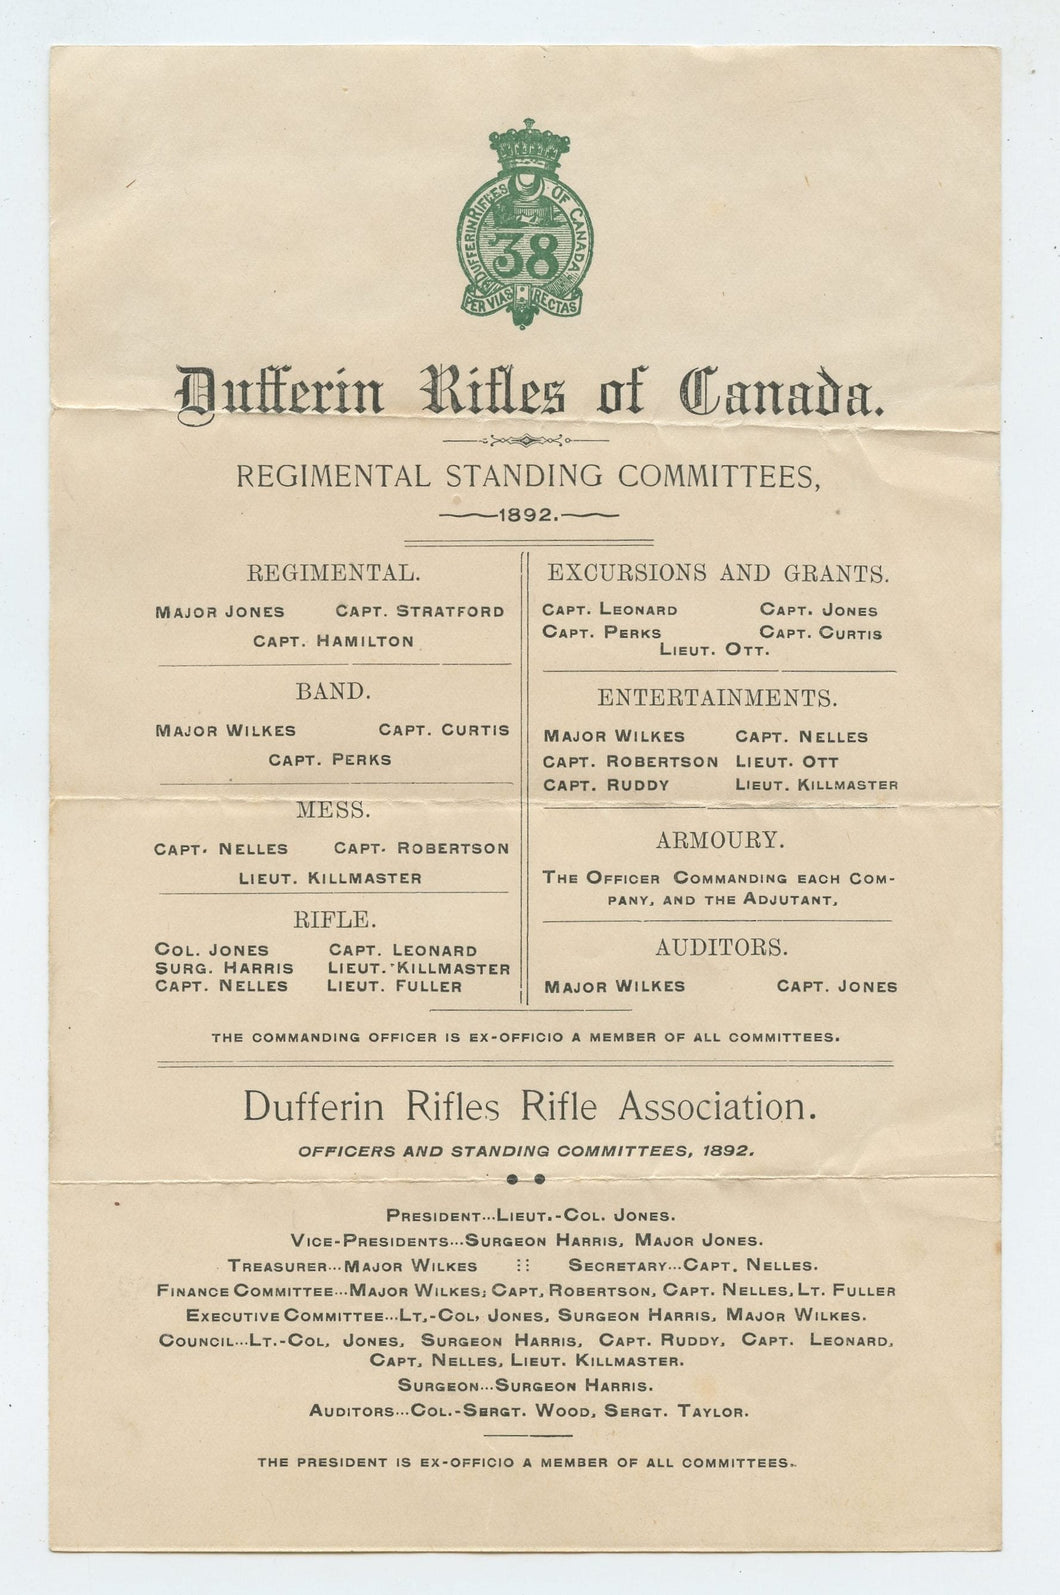 Dufferin Rifles of Canada Regimental Standing Committees, 1892